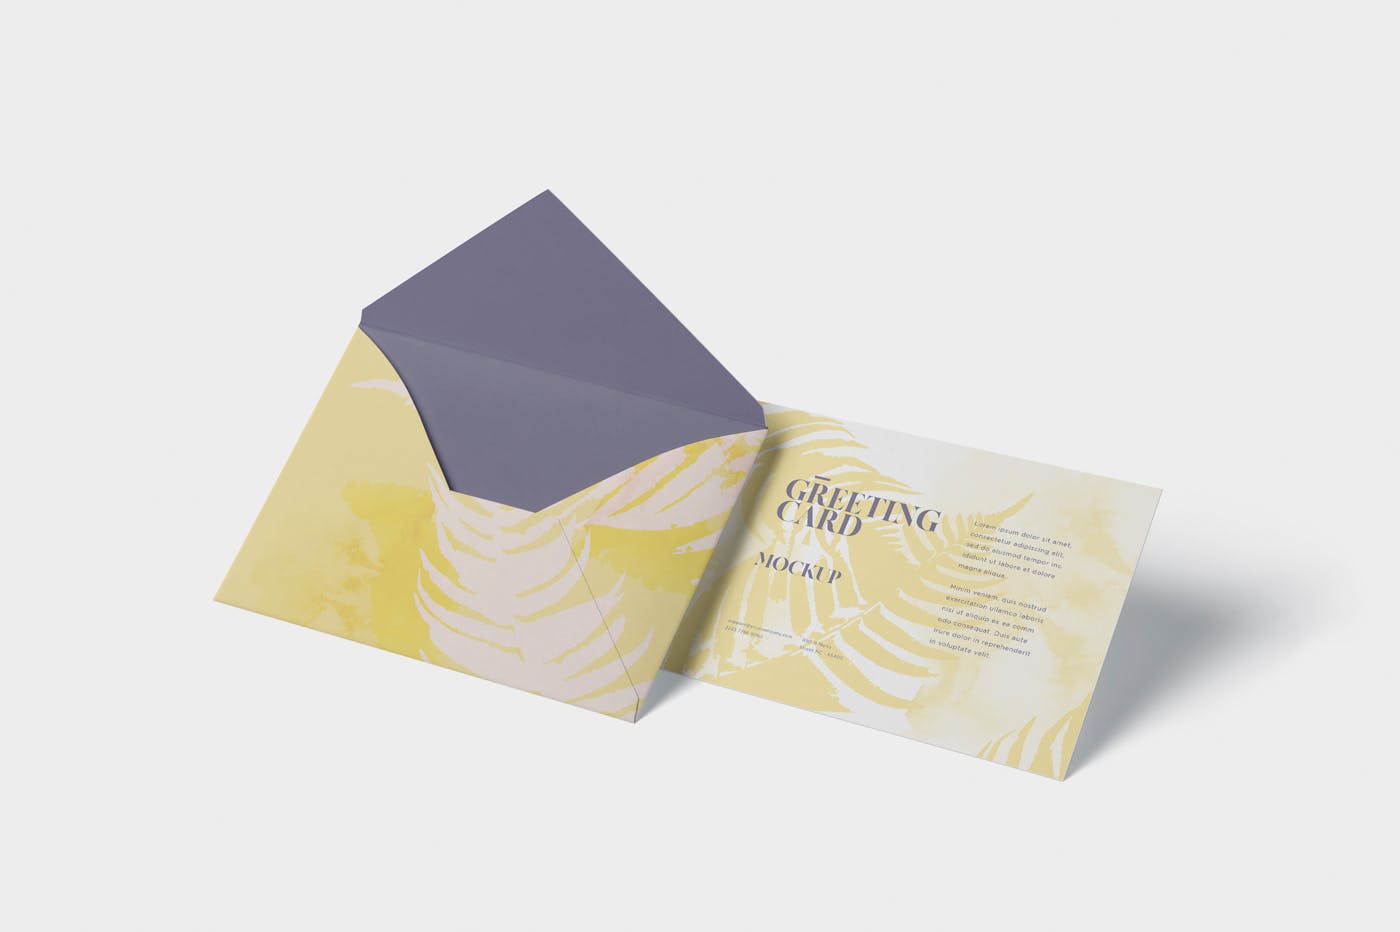 高端企业信封&贺卡设计图16图库精选 Greeting Card Mockup with Envelope – A6 Size插图(2)